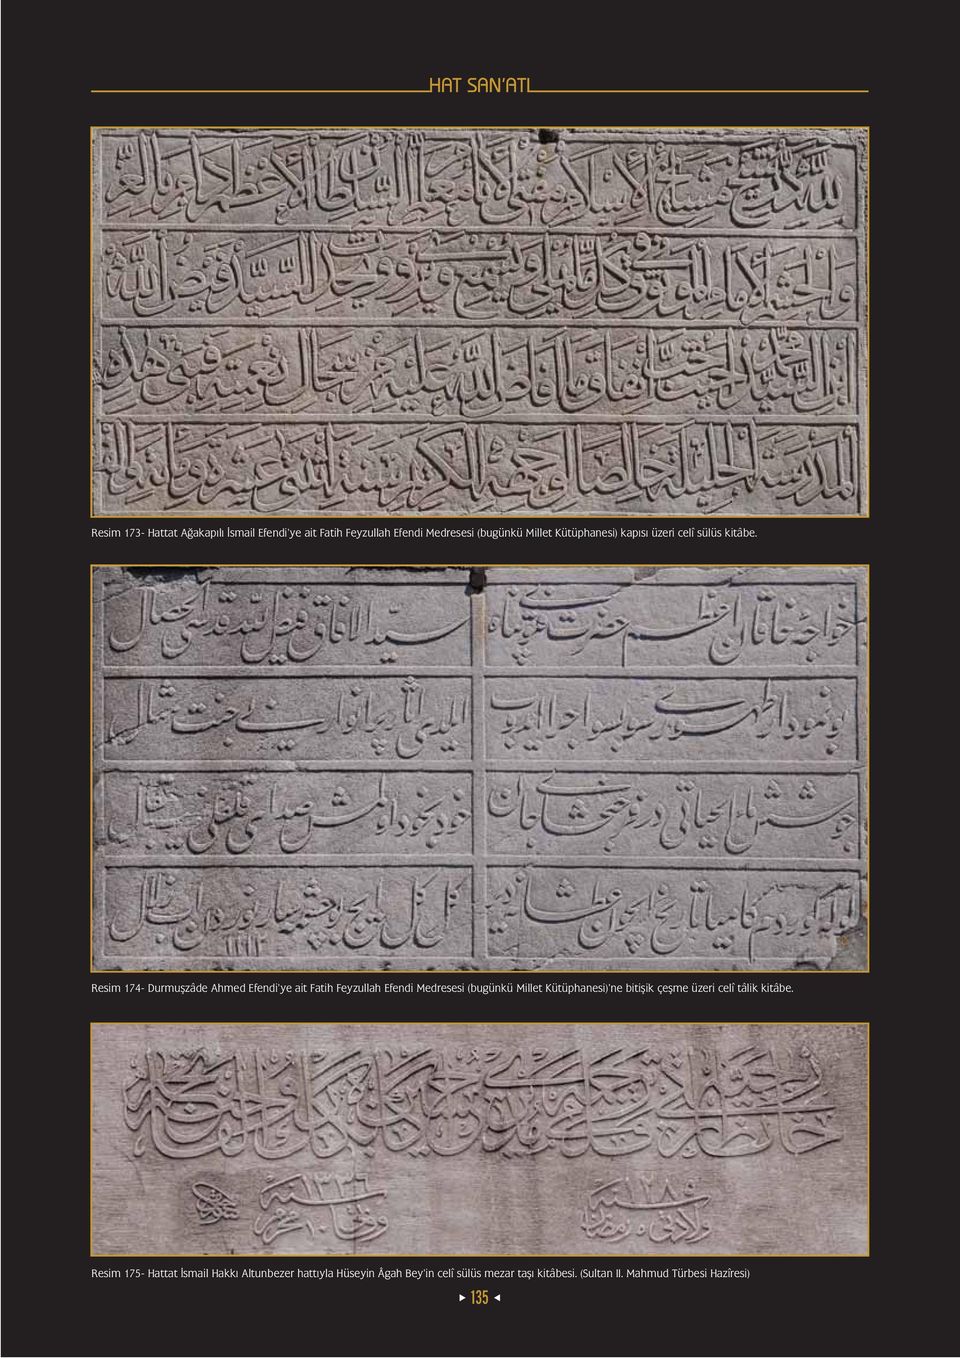 Resim 174- Durmuþzâde Ahmed Efendi ye ait Fatih Feyzullah Efendi Medresesi (bugünkü Millet Kütüphanesi) ne